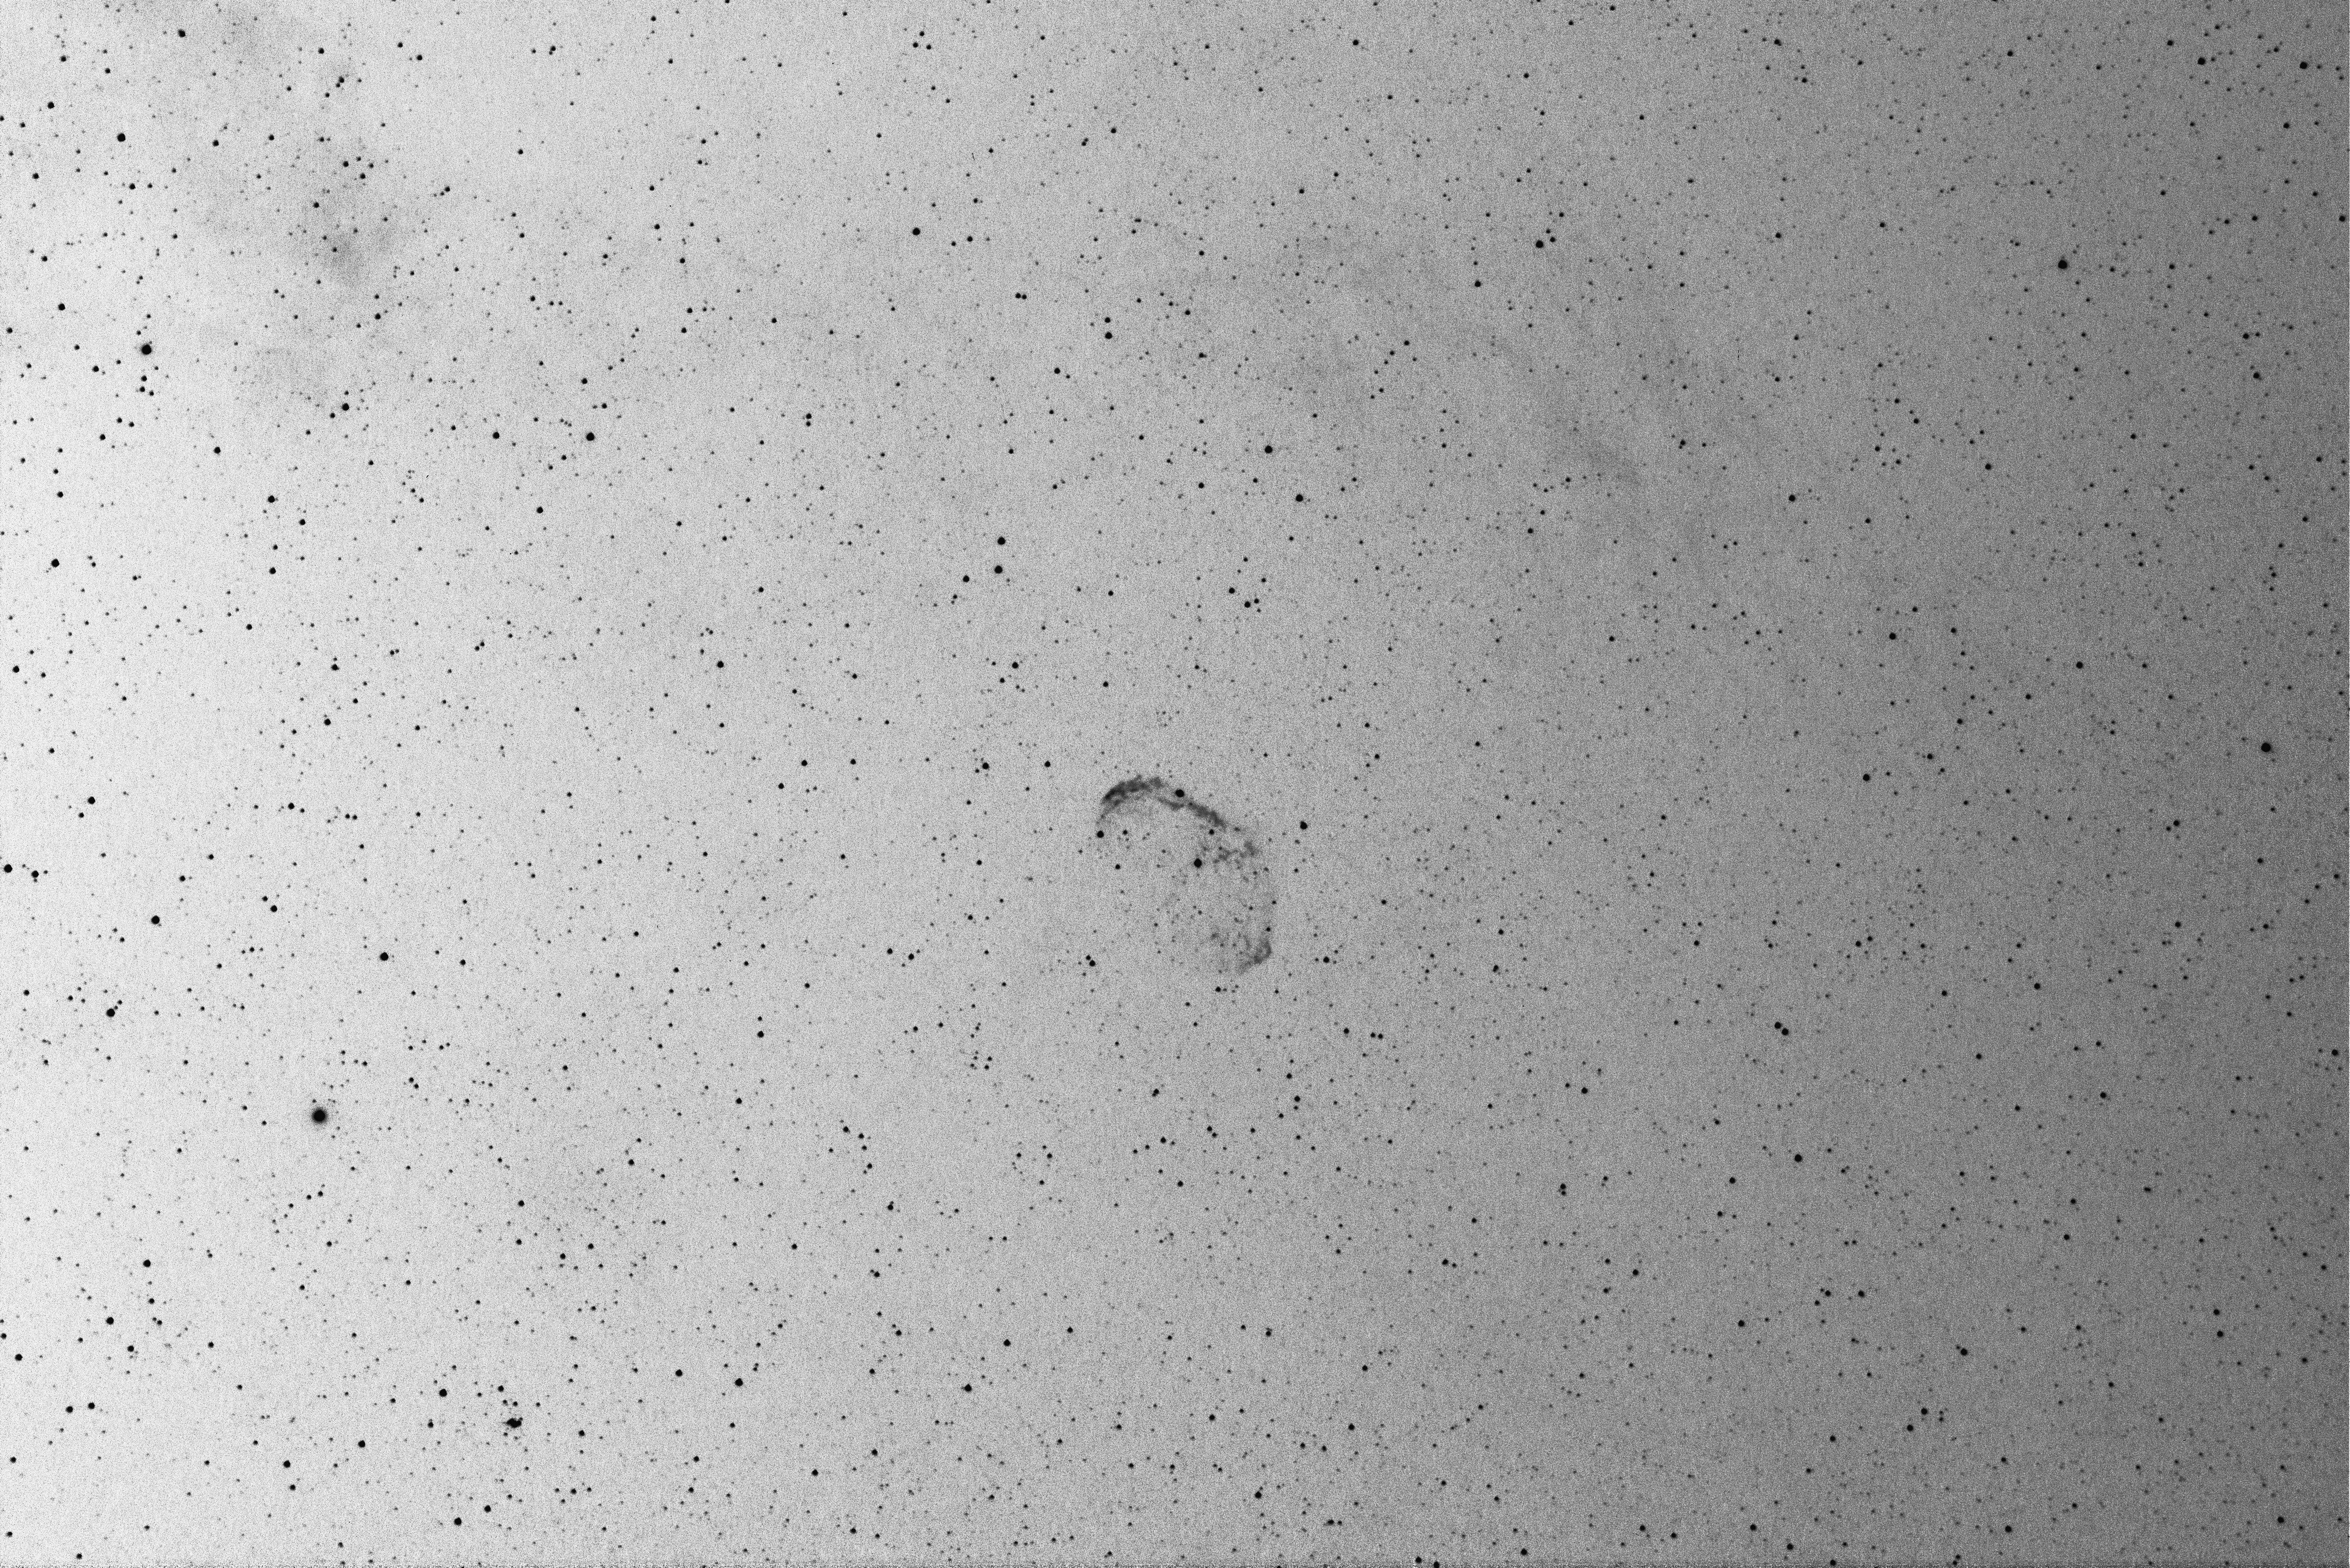 NGC6888_2016_08_07_2205_2305UT_Halpha_inv